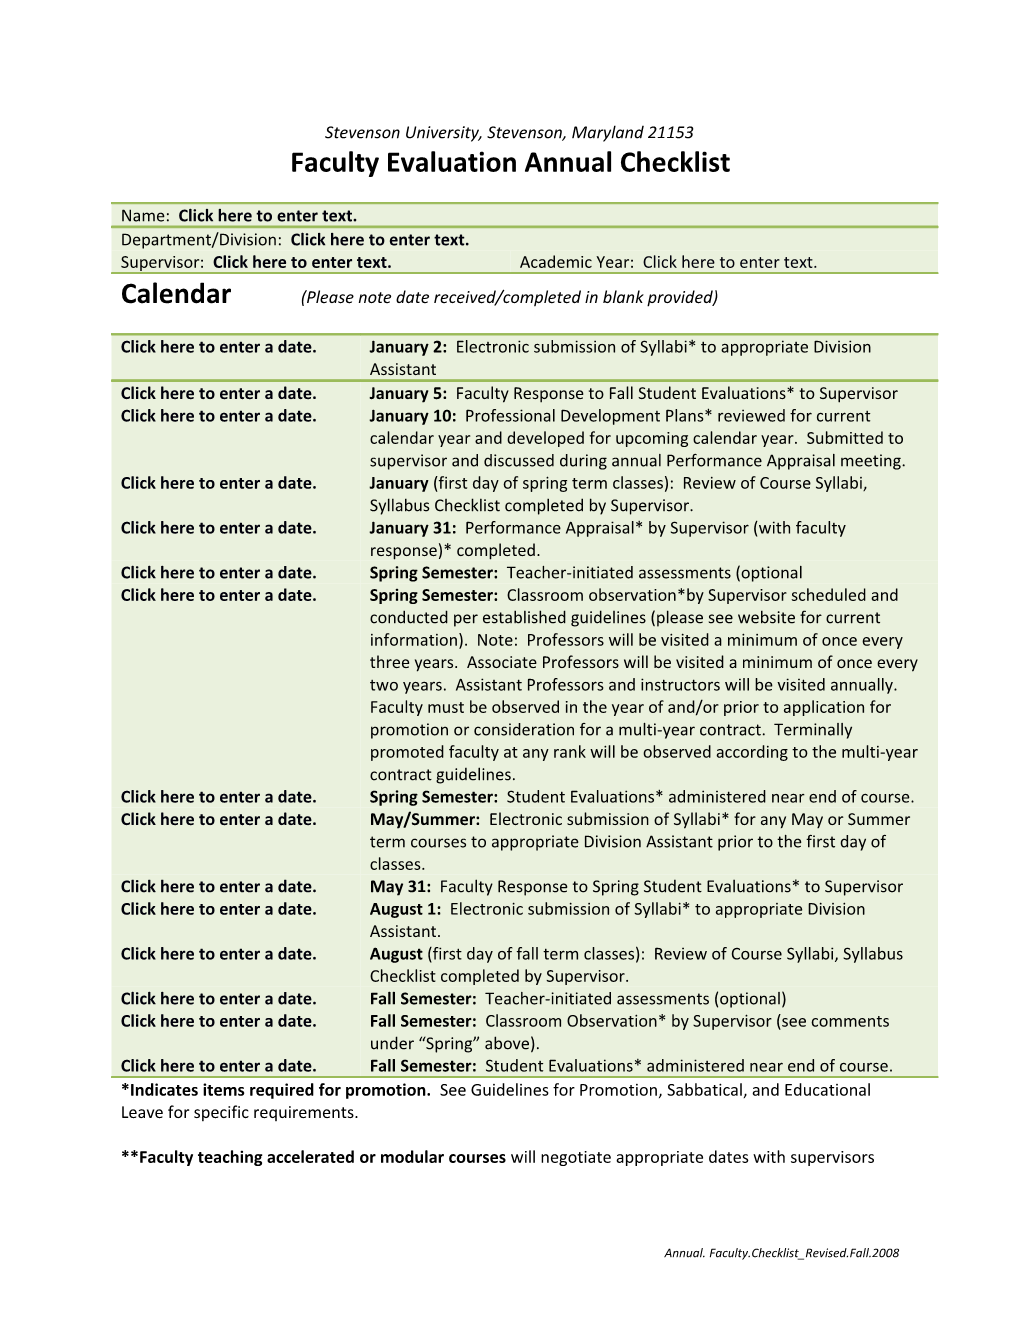 Faculty Evaluation Annual Checklist